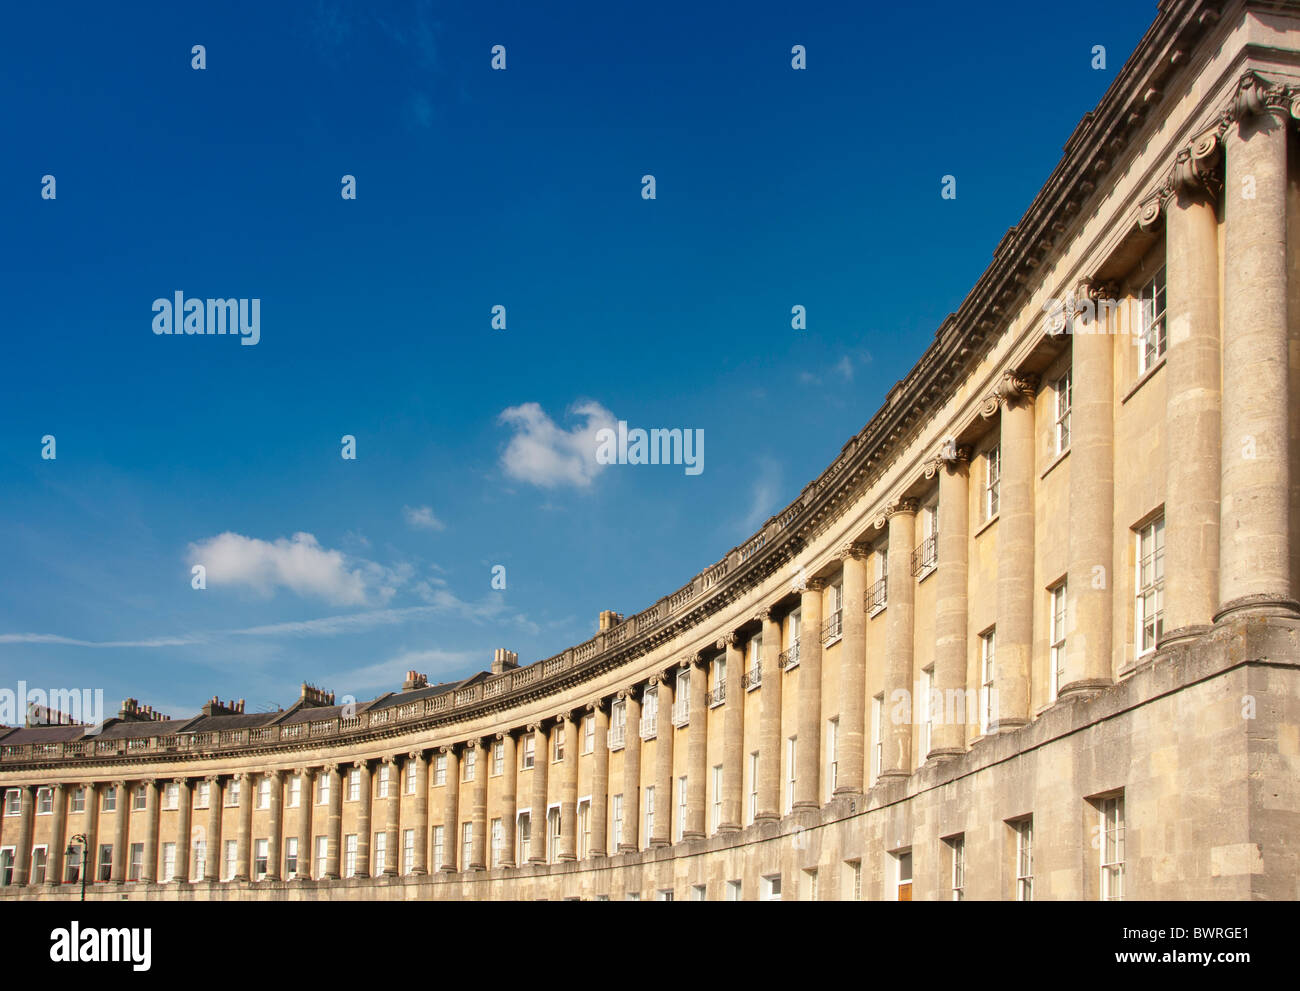 The Royal Crescent, Bath, England. Stock Photo